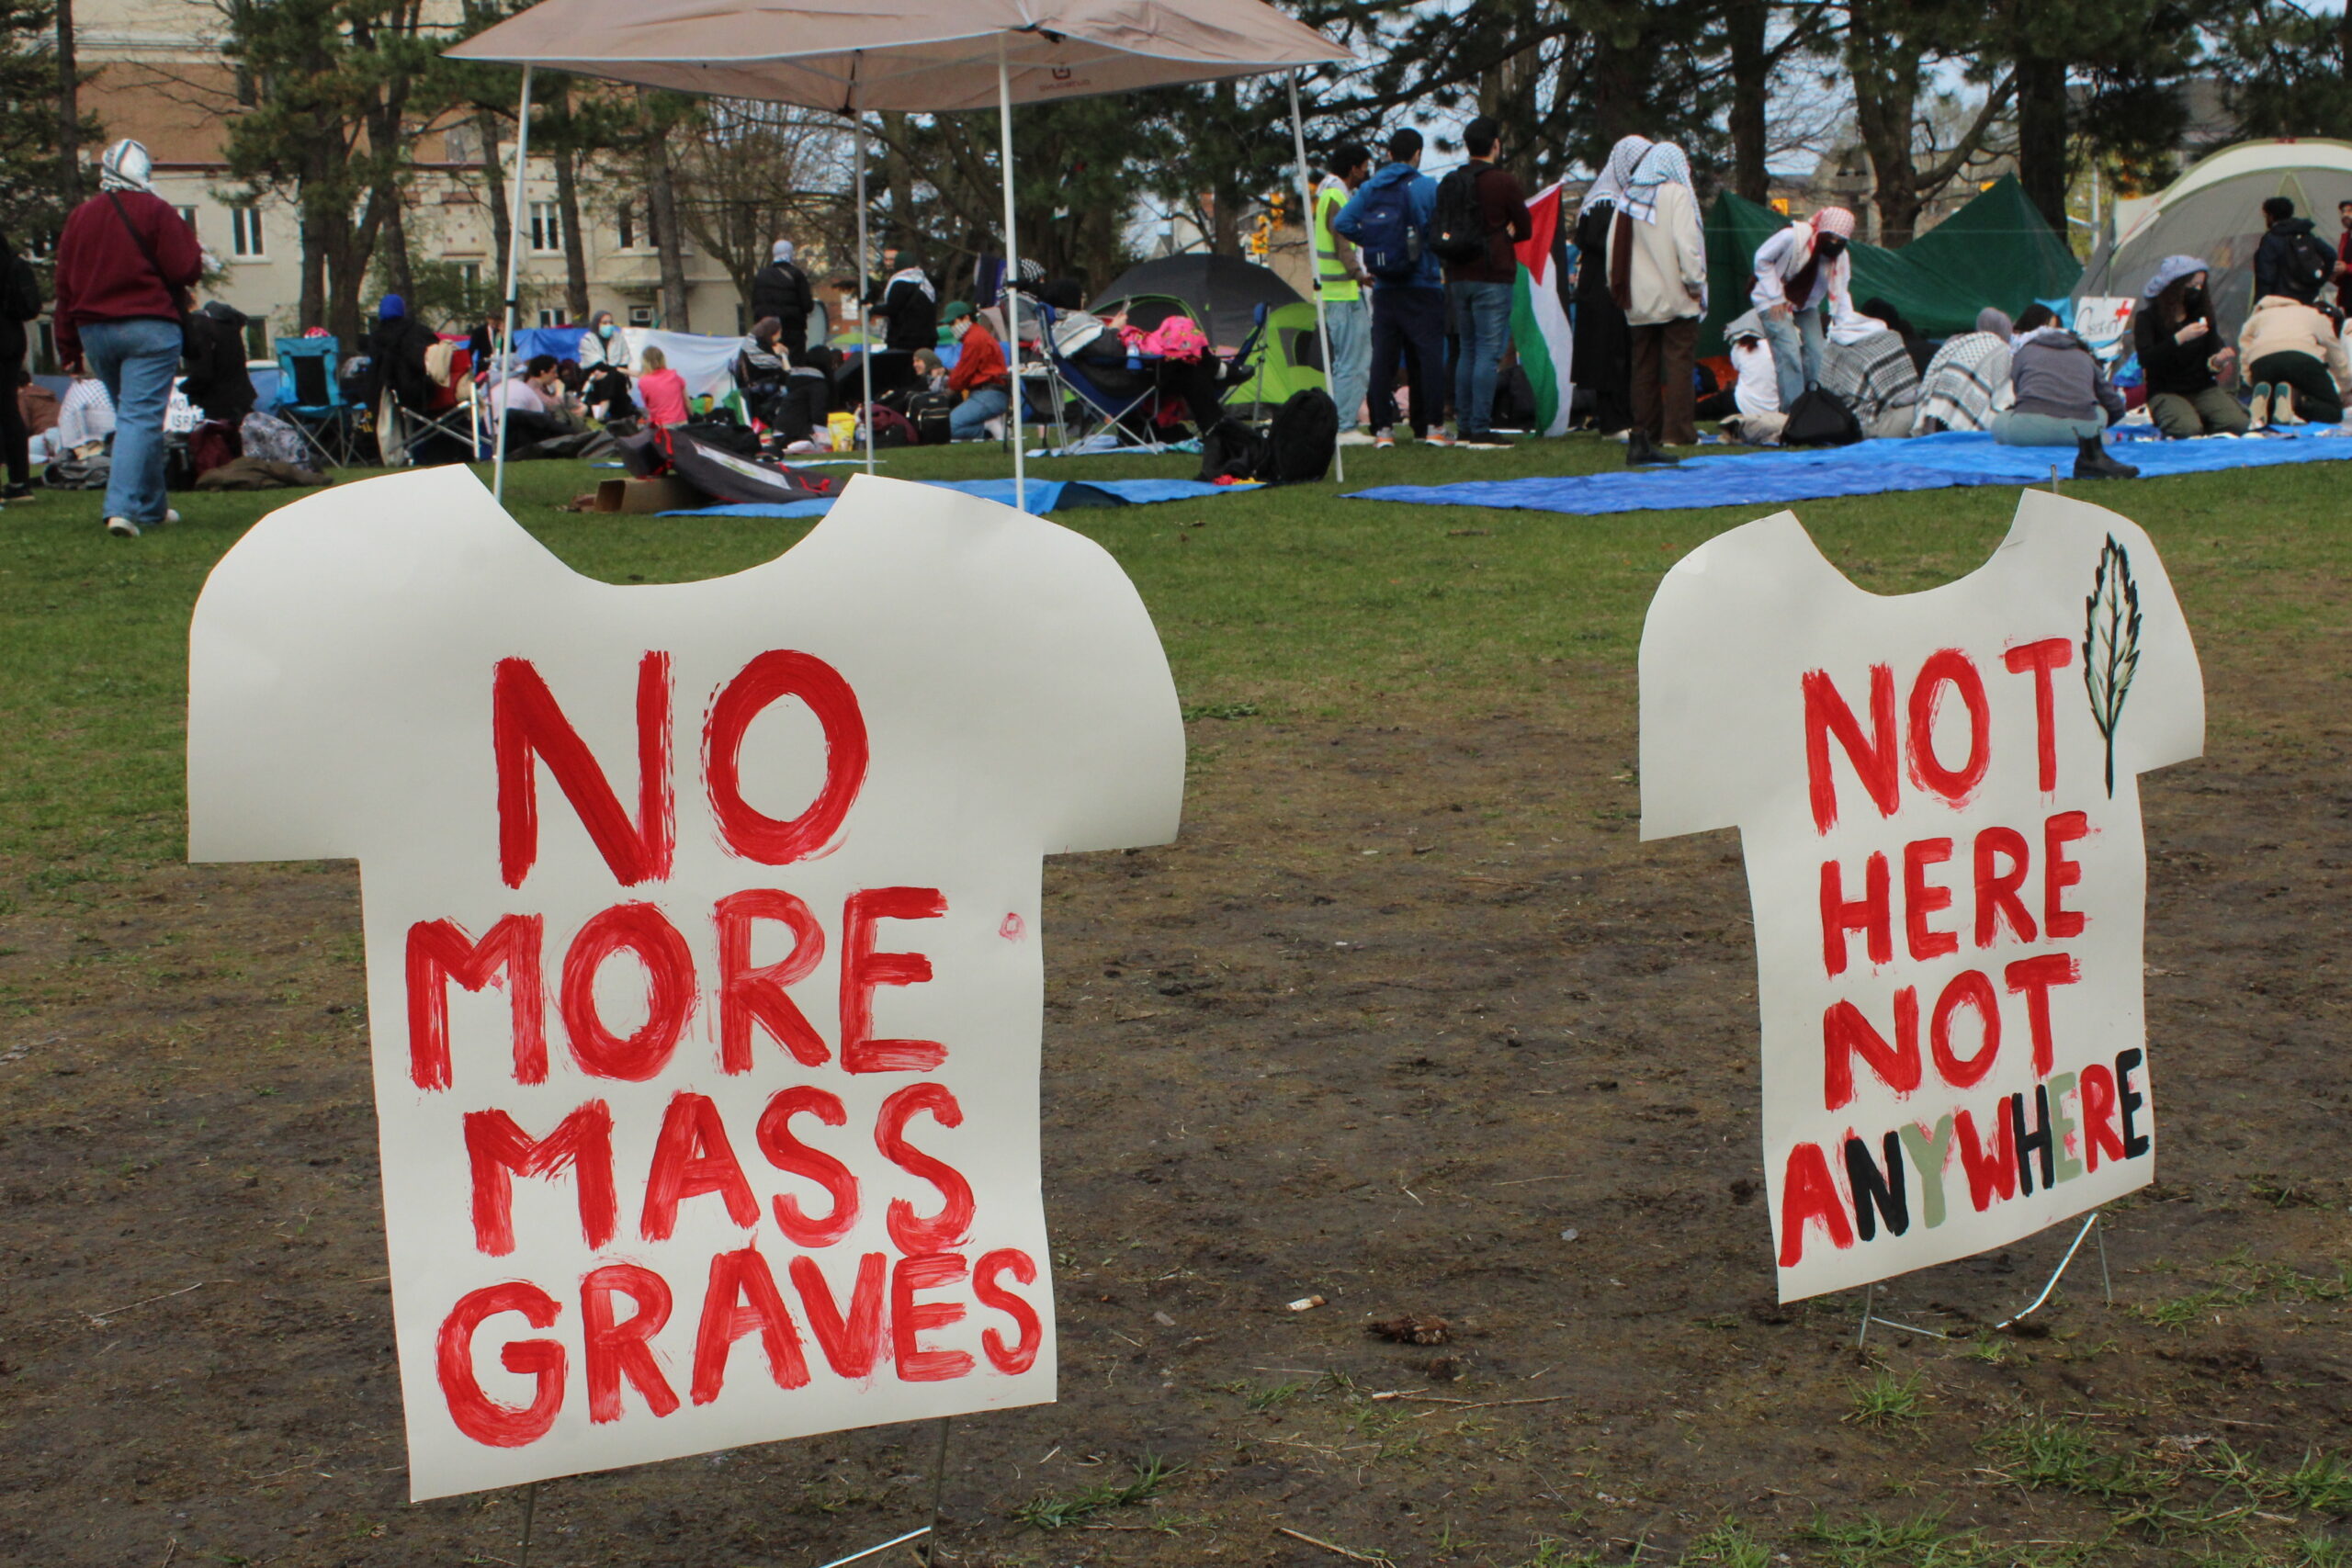 signs saying "no more mass graves"